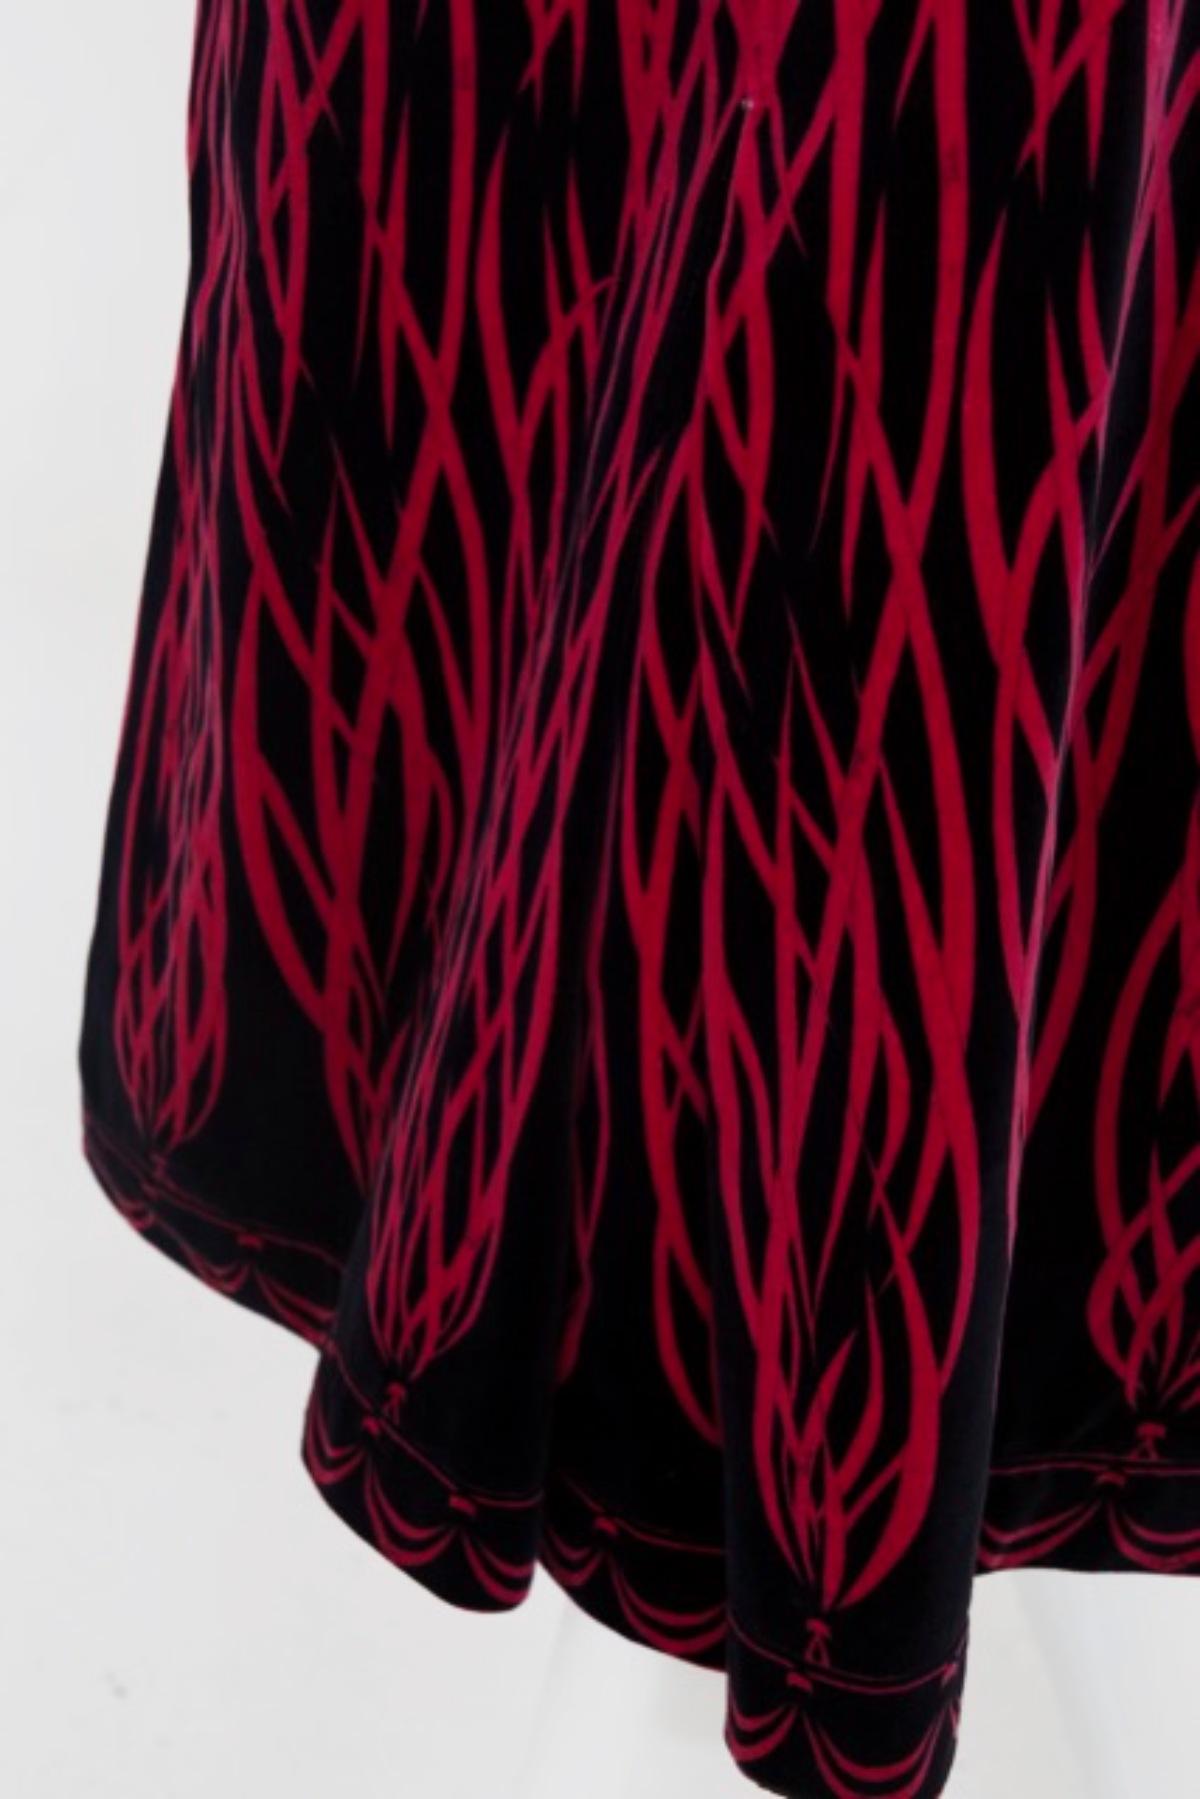 Emilio Pucci Psychedelic Velvet Two Pieces Suit For Sale 2